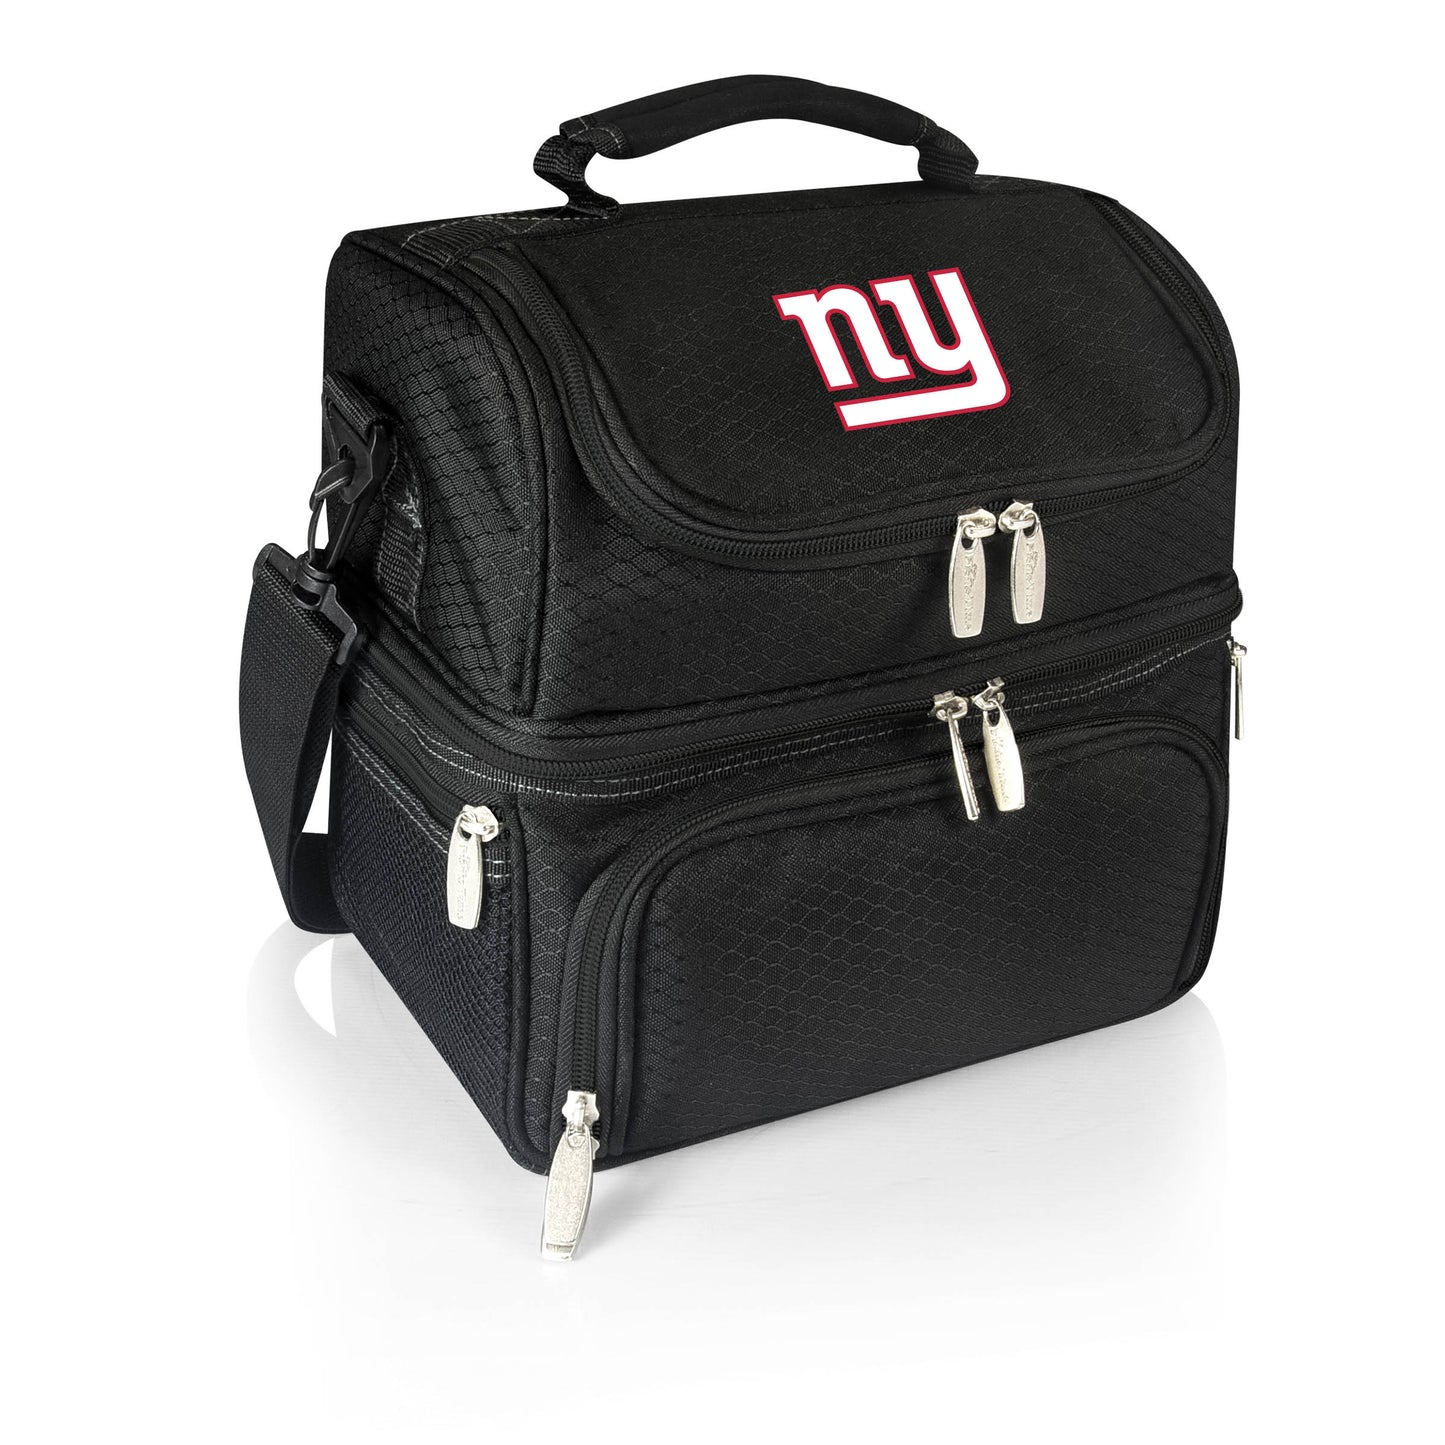 New York Giants - Pranzo Lunch Cooler Bag